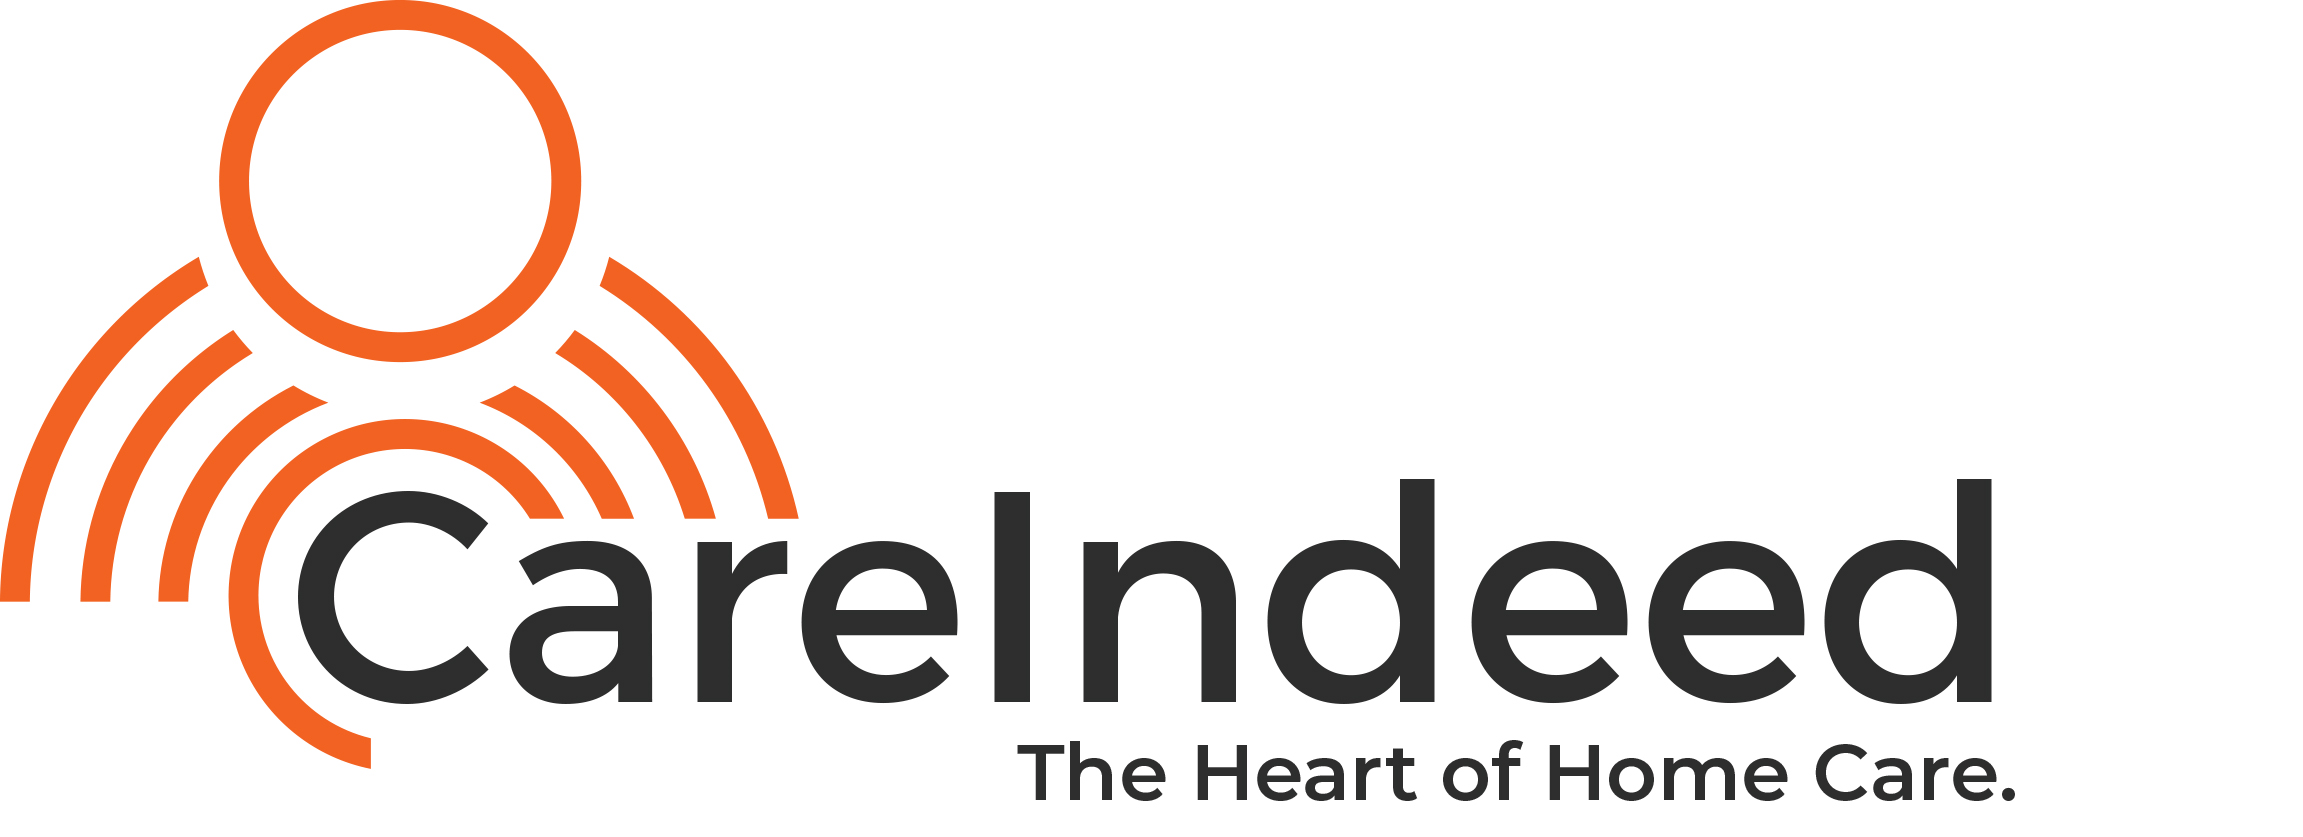 Care Indeed Company Logo